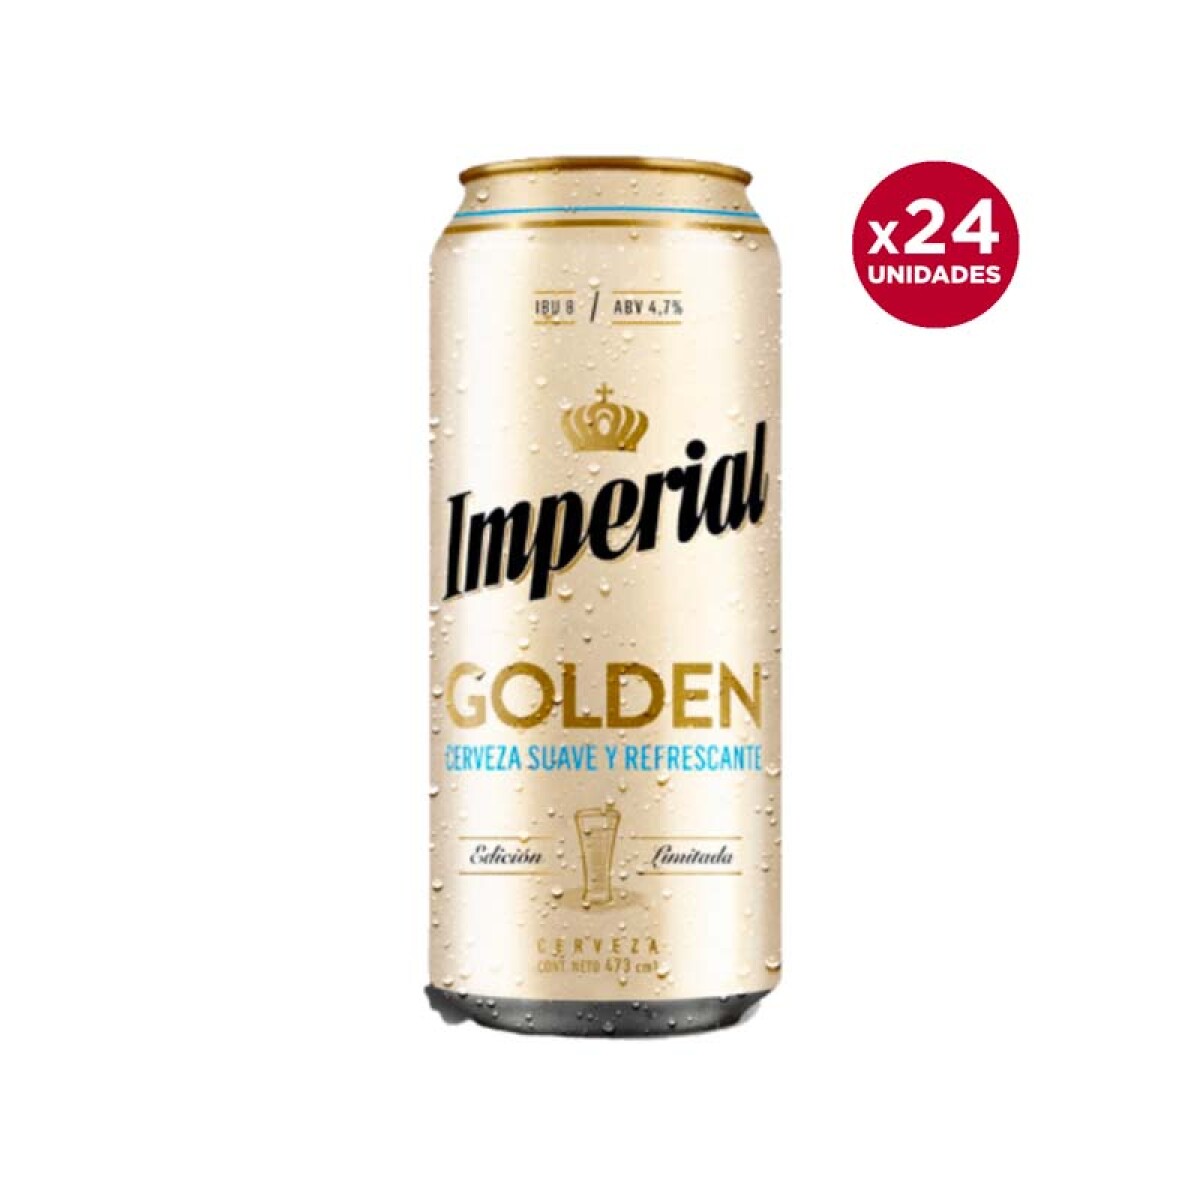 Cerveza Imperial Golden Lata 24 unidades - 473 ml 